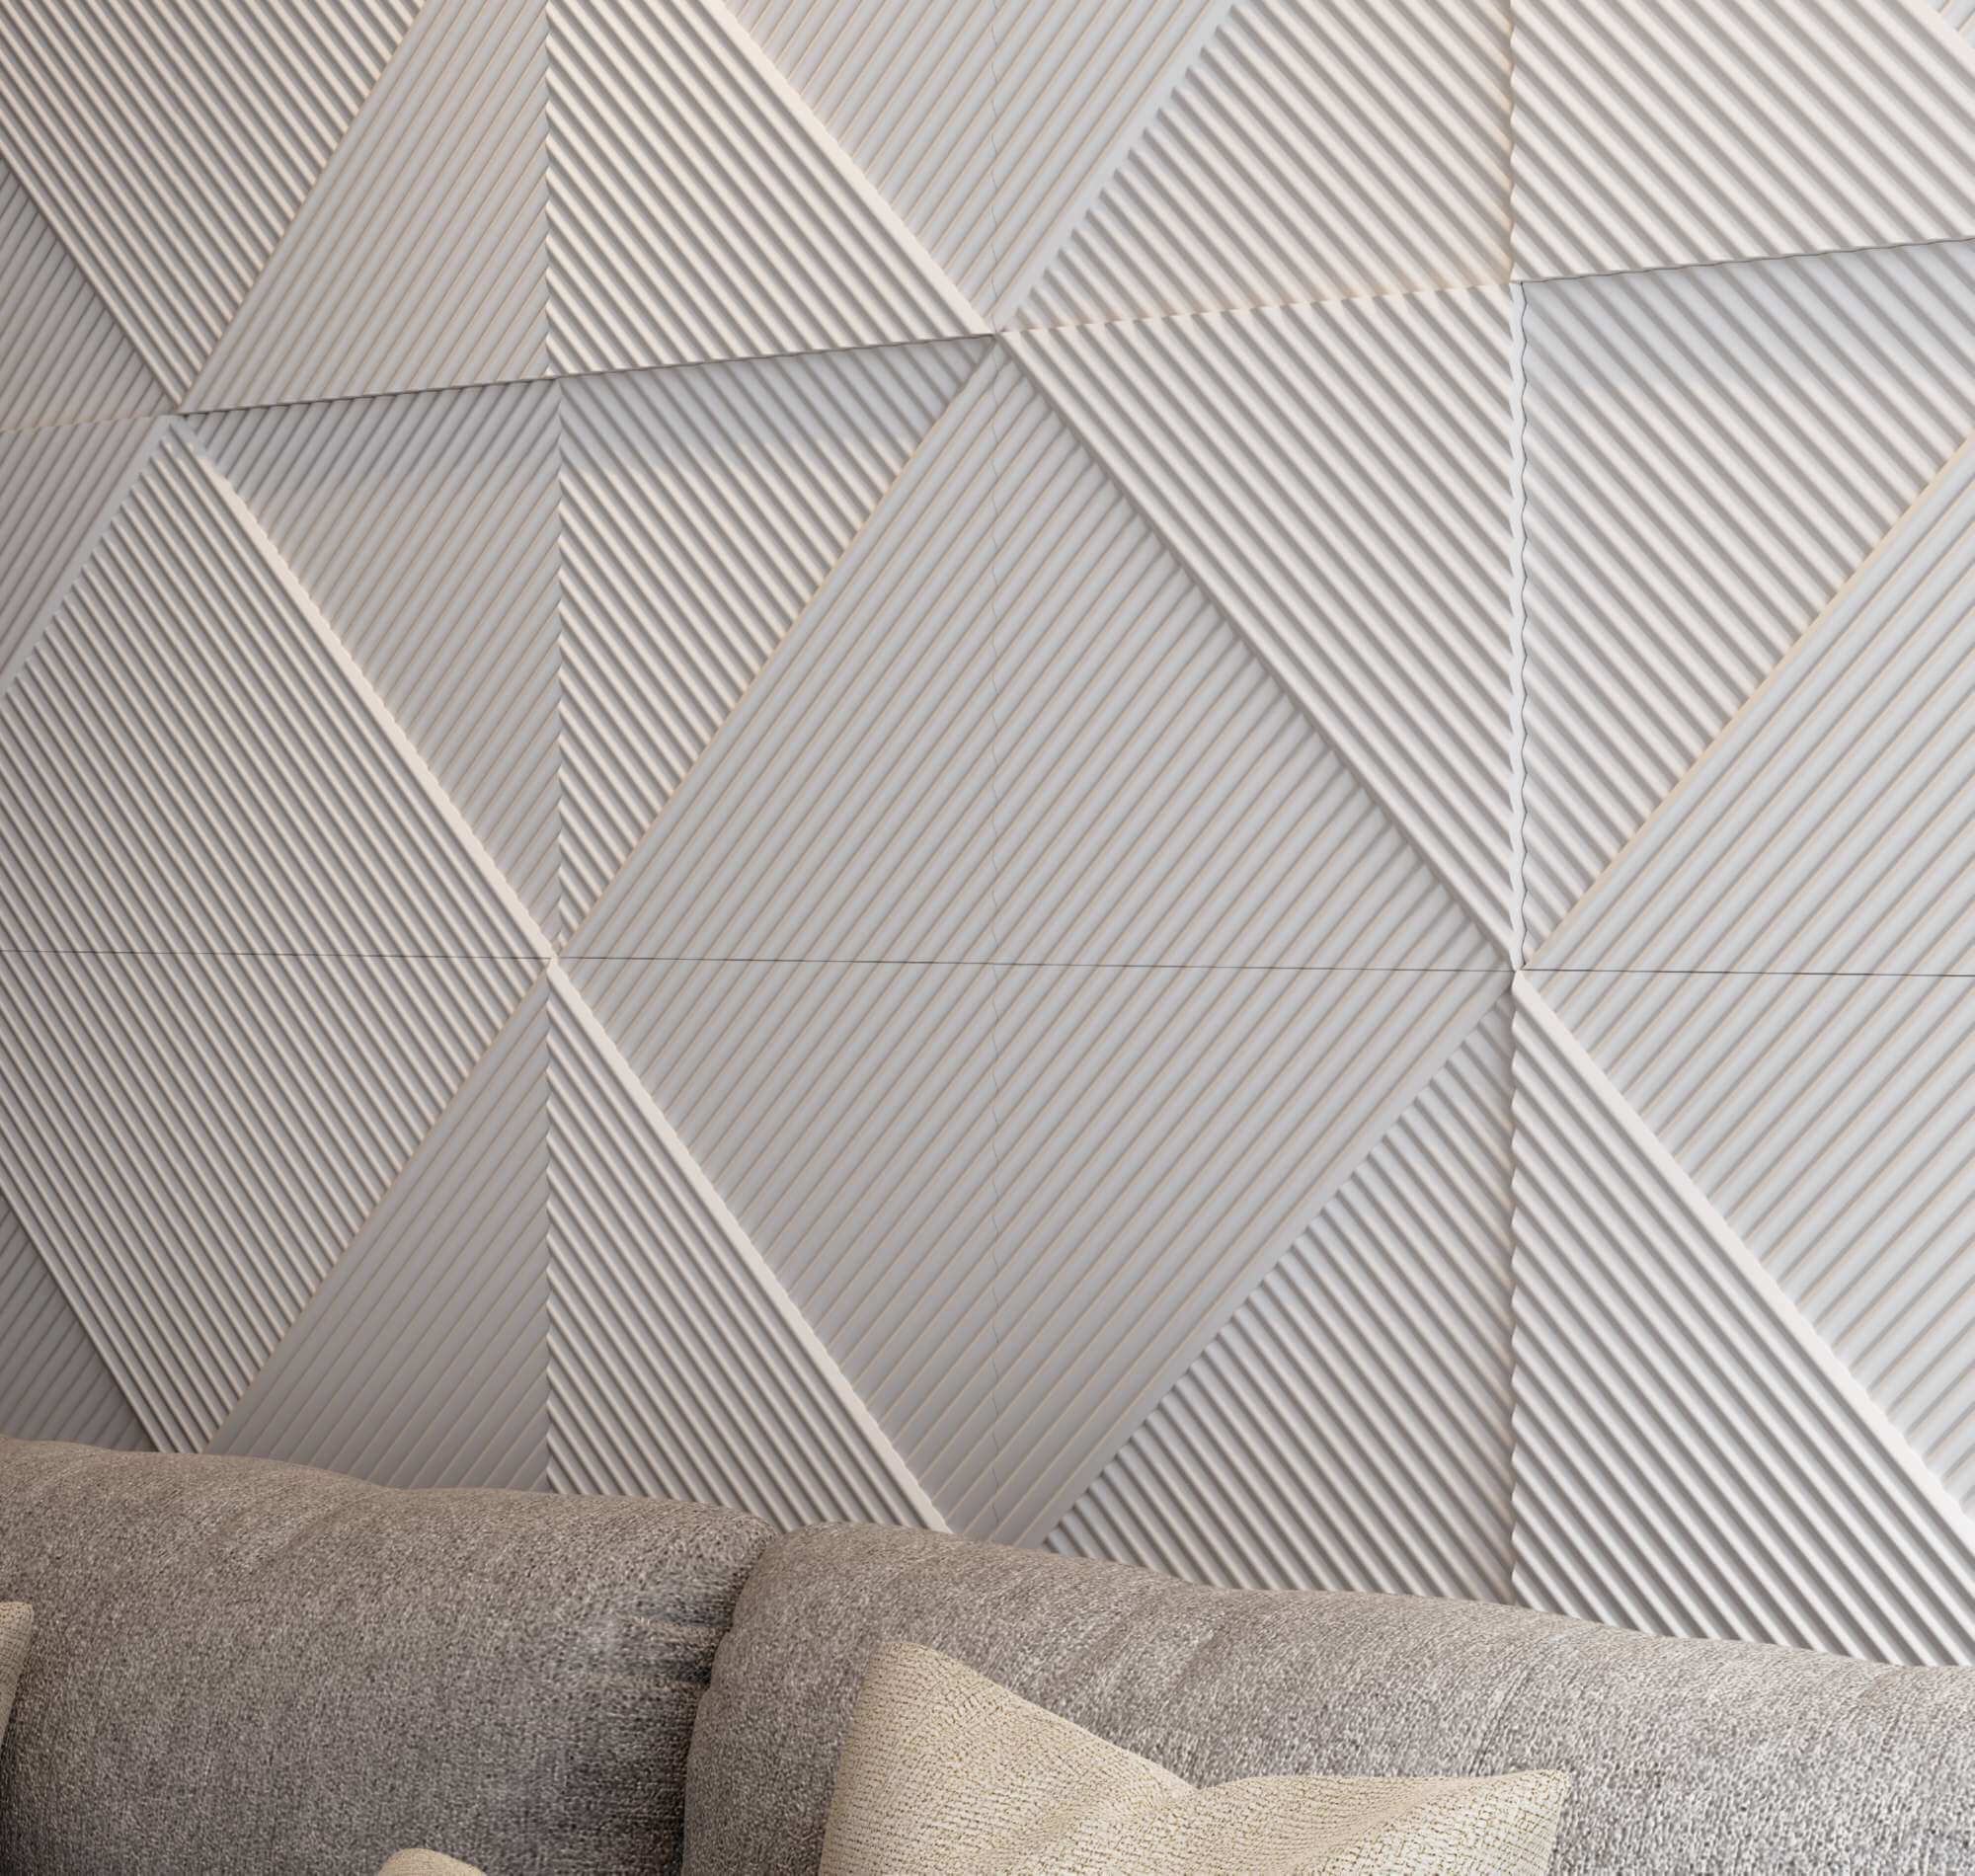 3D Polystyrene Wall Panels - DecorMania